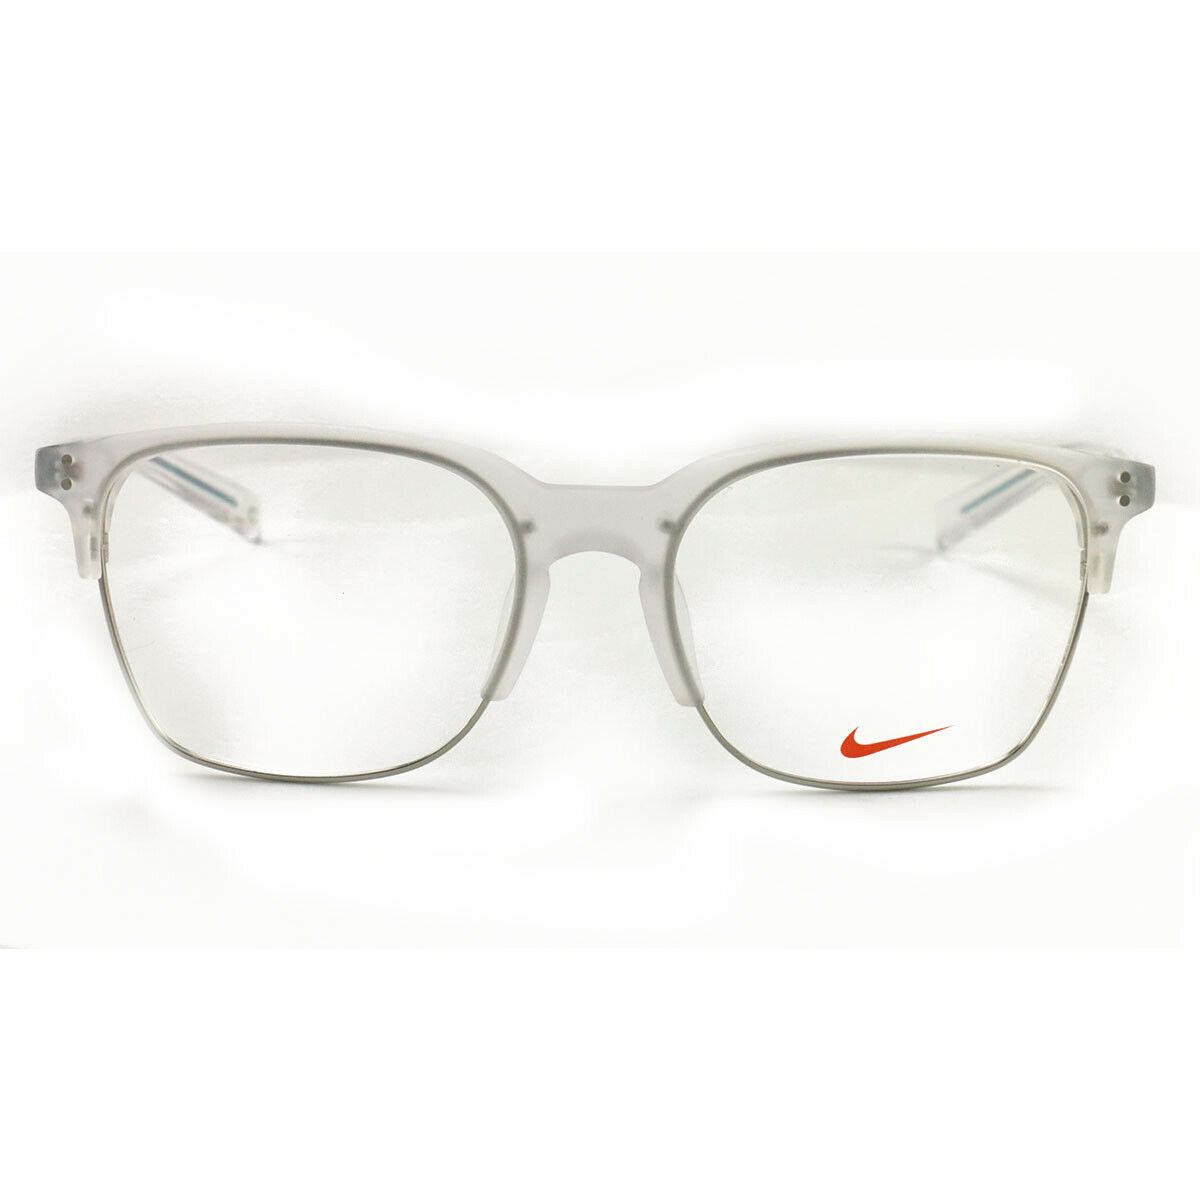 Nike Men S Eyeglasses Ev38kd 970 Matte Clear 55 19 135 Demo Lens Eyeglass Frames